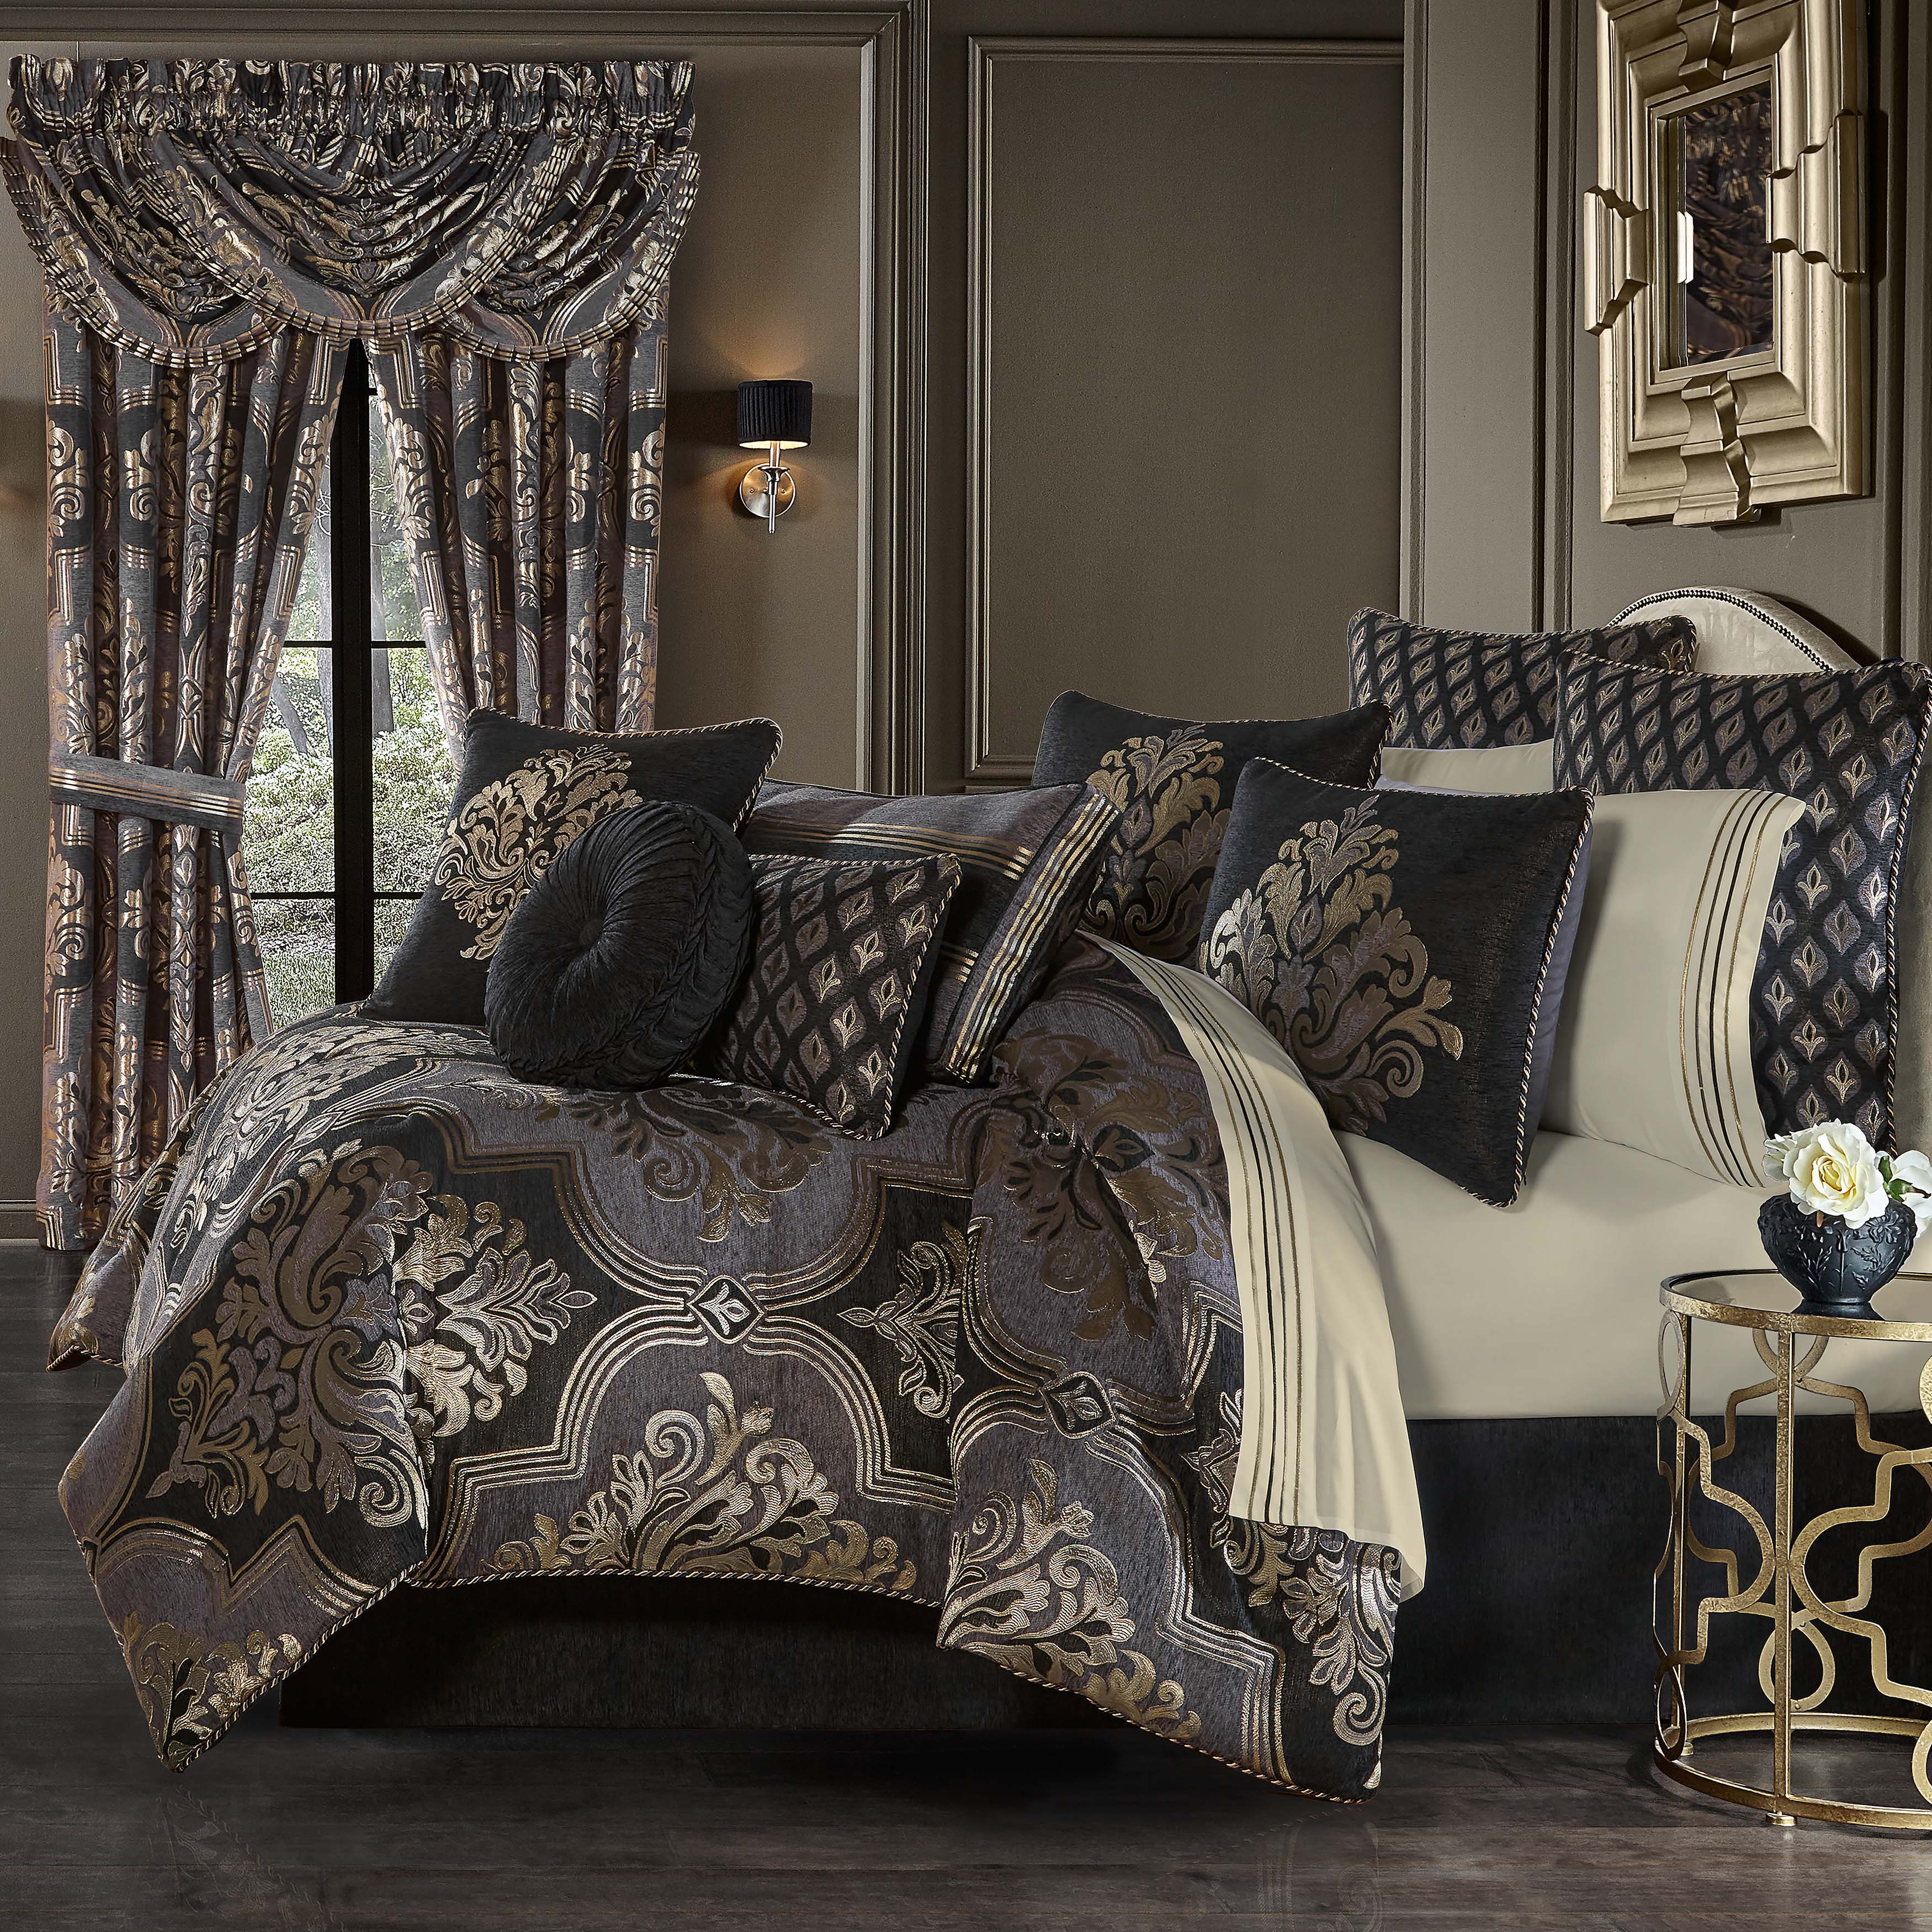 King Luxury Bedding Sets: Shop Elegant Bedding Sets - Macy's